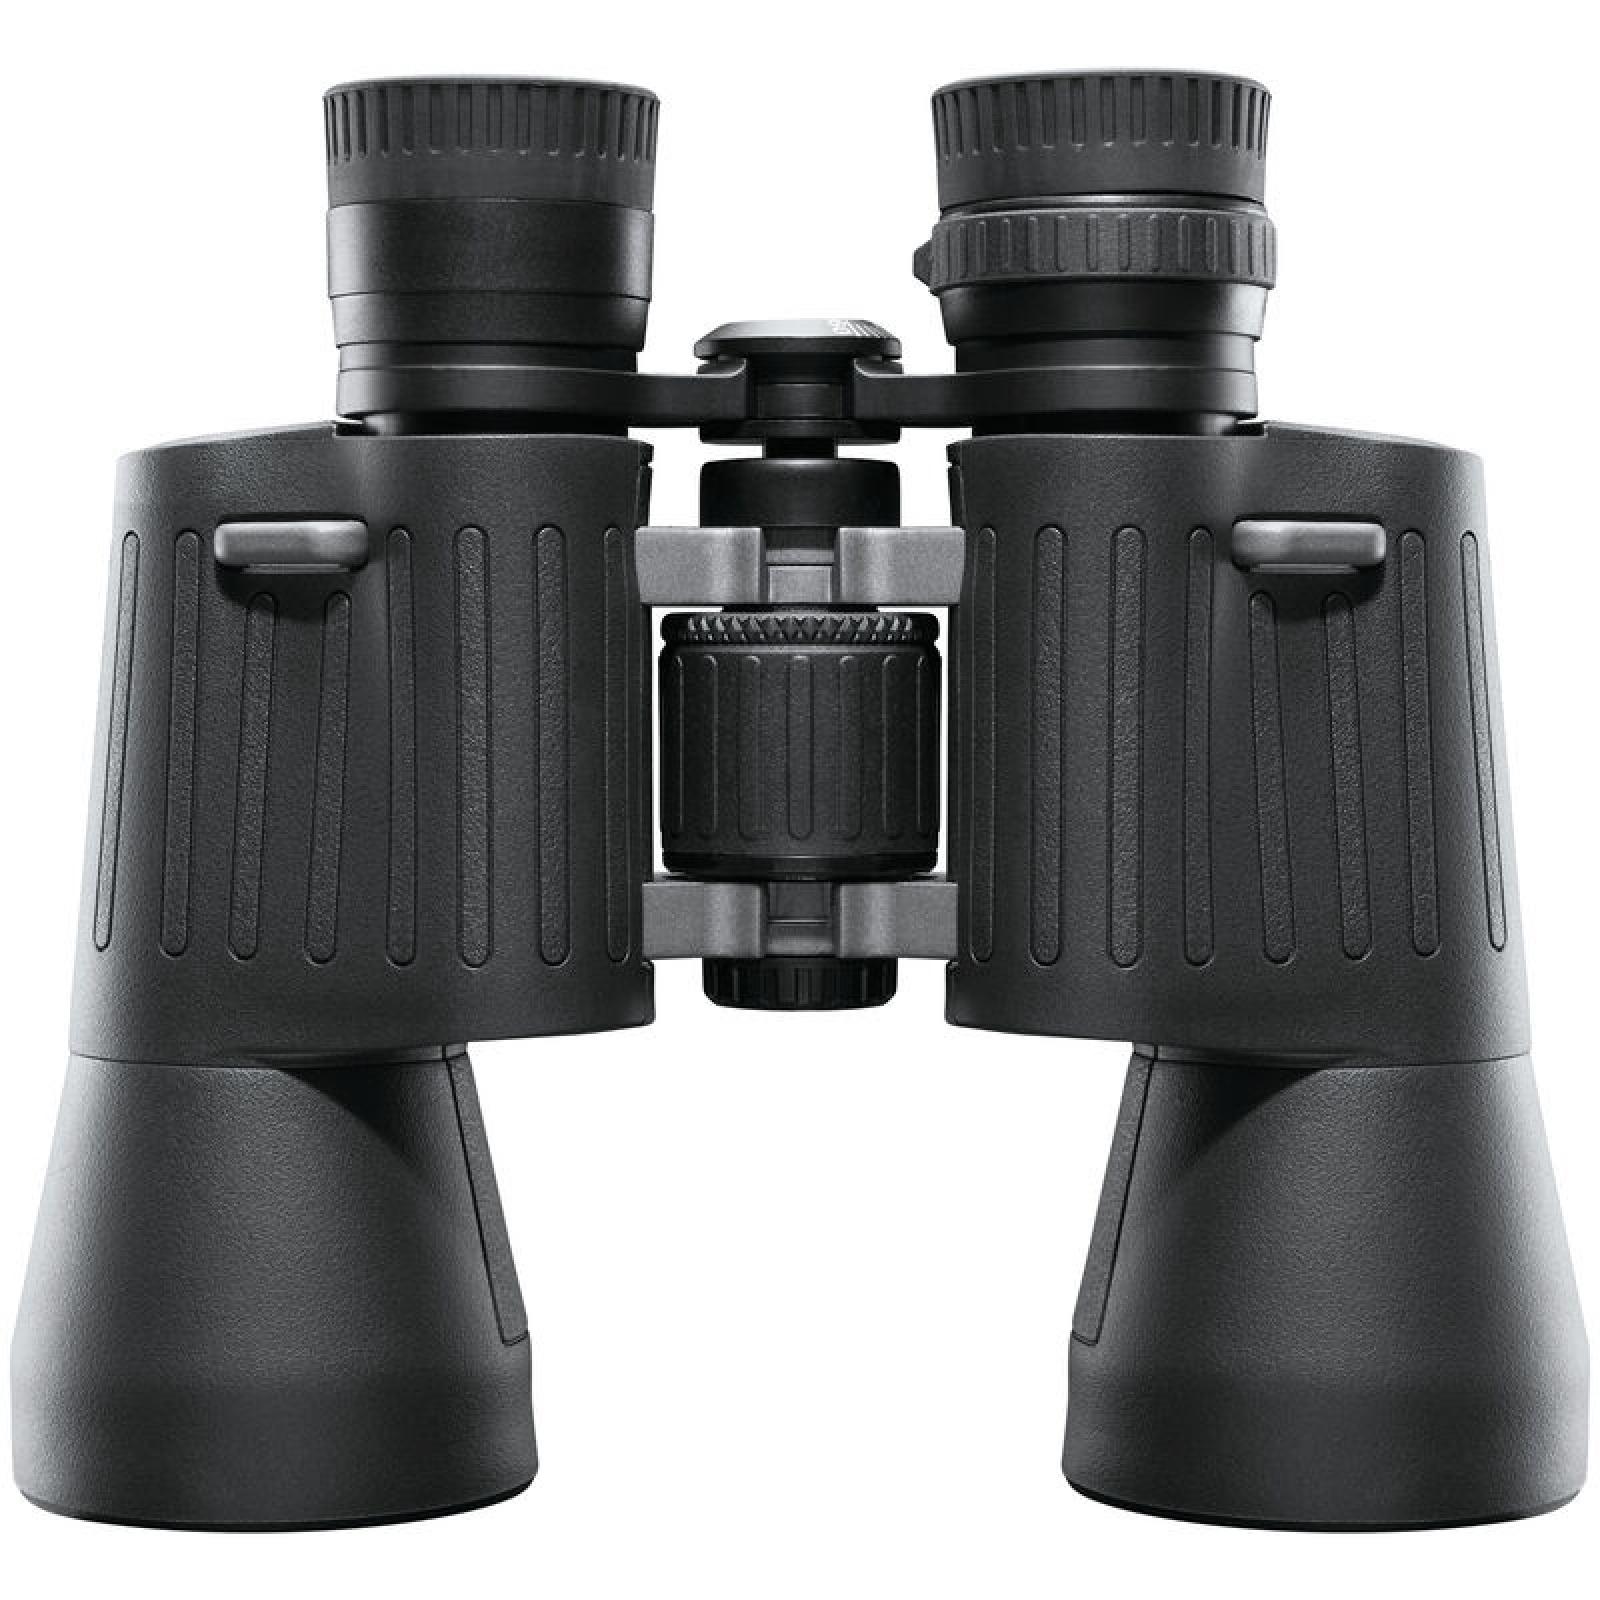 Bushnell Powerview 2 10x50mm Binoculars